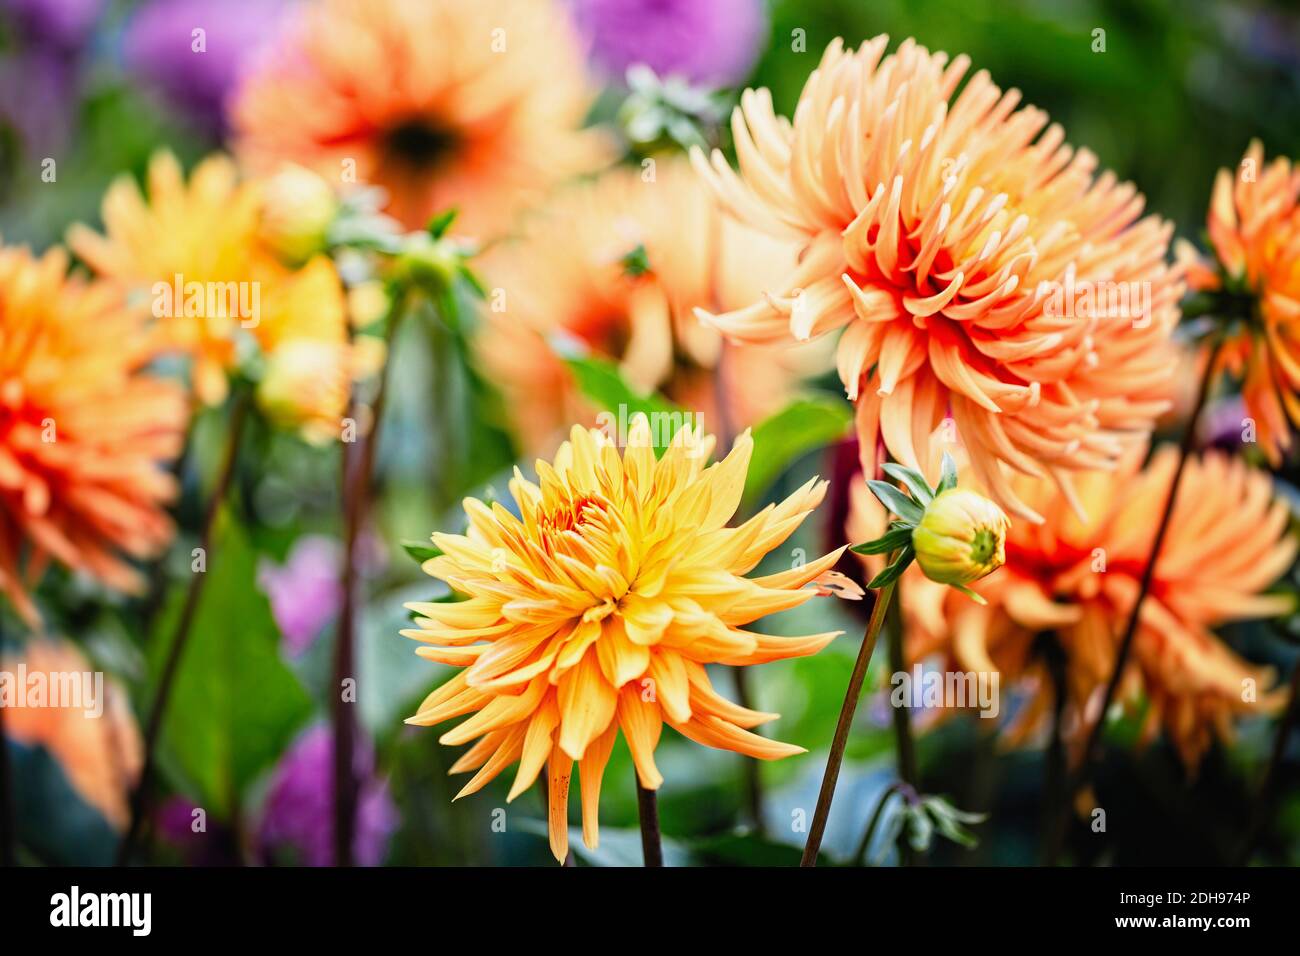 Dahlia, masa de flores de color naranja creciendo al aire libre. Foto de stock